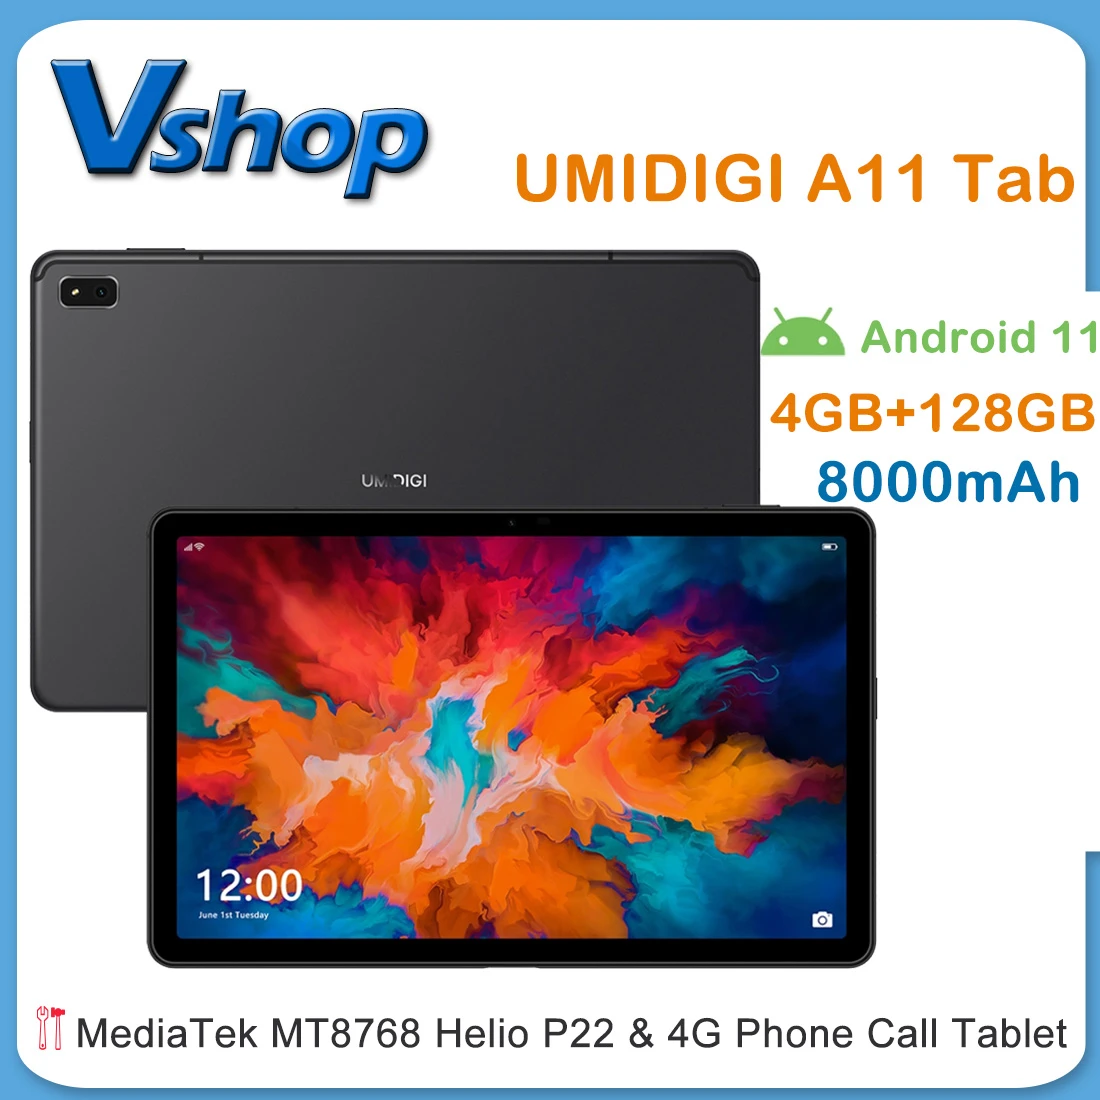 poco best gaming phone Global Version UMIDIGI A11 Tab 4G Phone Call Tablet Android 11 10.4" 4GB 128GB MT8768 Helio P22 8000mAh Mega Battery Tablet PC poco budget phones